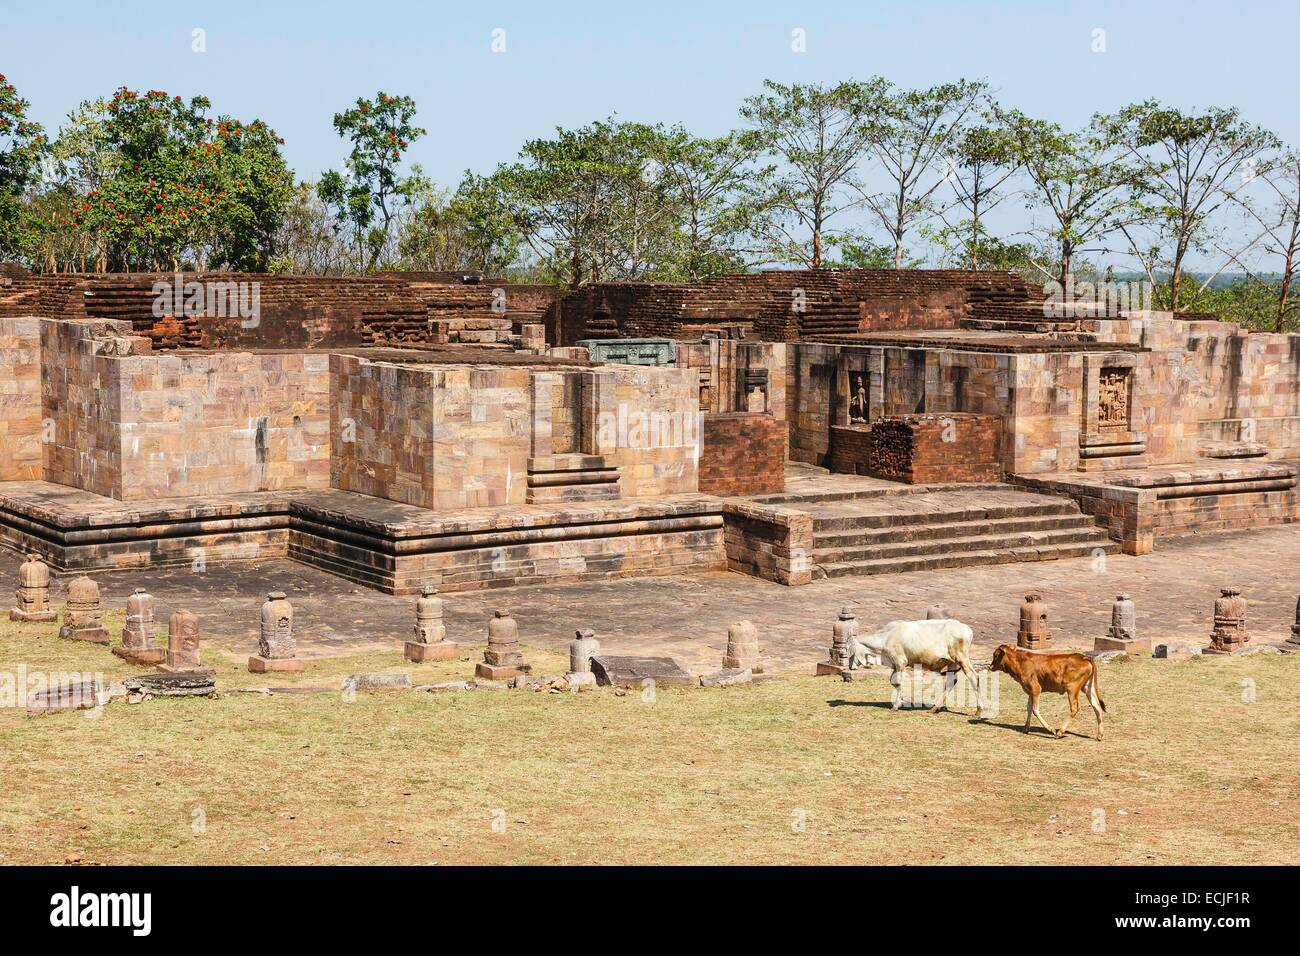 India, Odisha, Ratnagiri, monasterio budista de fecha 8ª-11ª Siglo Foto de stock